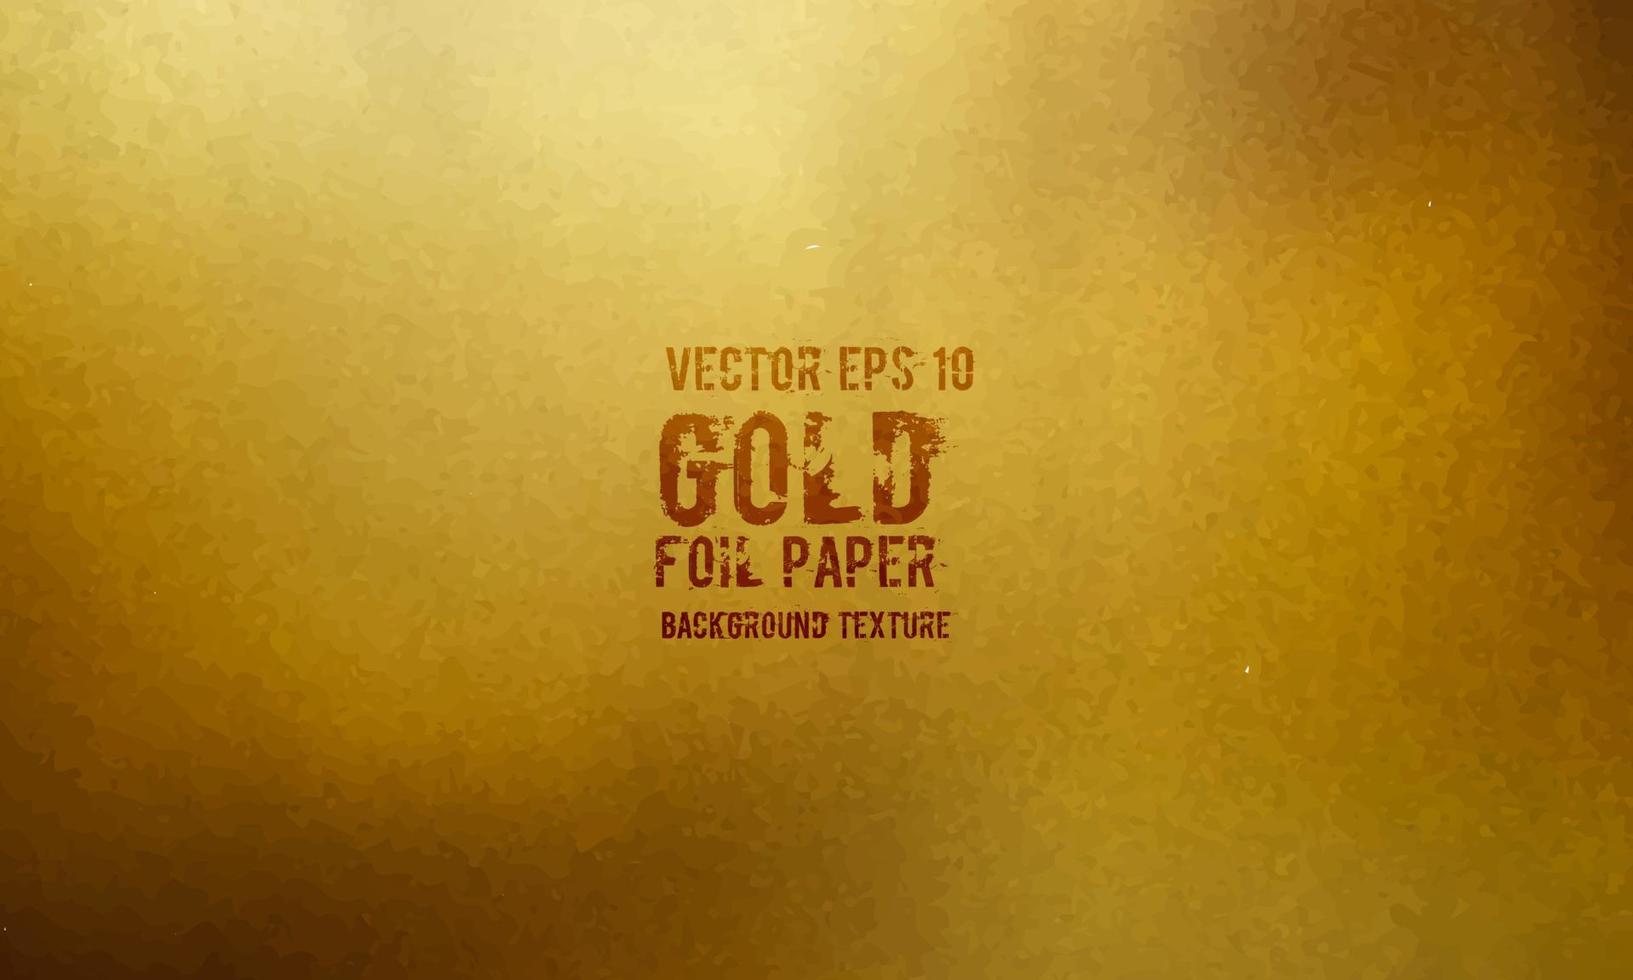 Gold foil paper texture background. Vector EPS 10